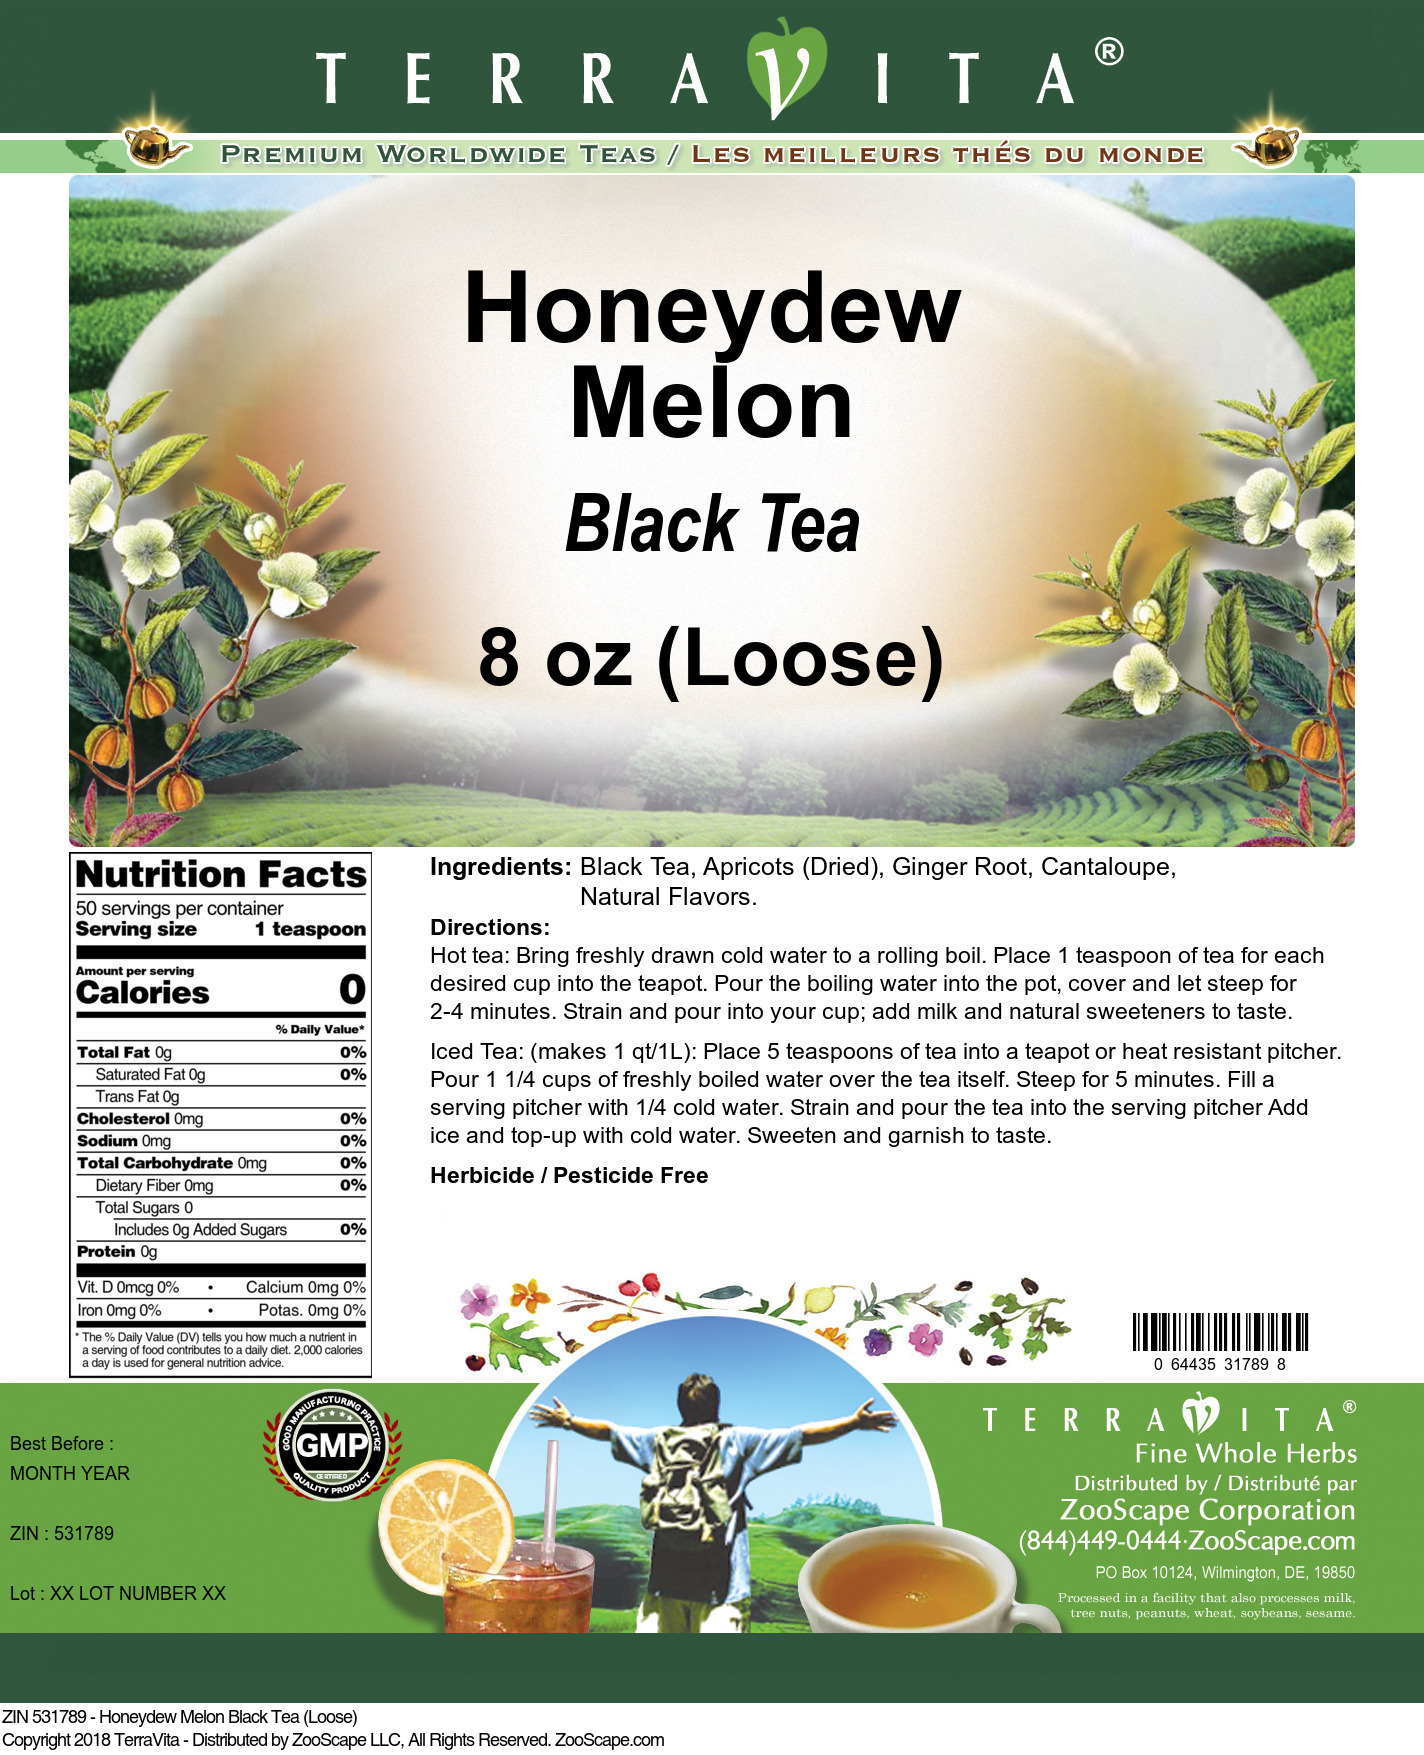 Honeydew Melon Black Tea (Loose) - Label